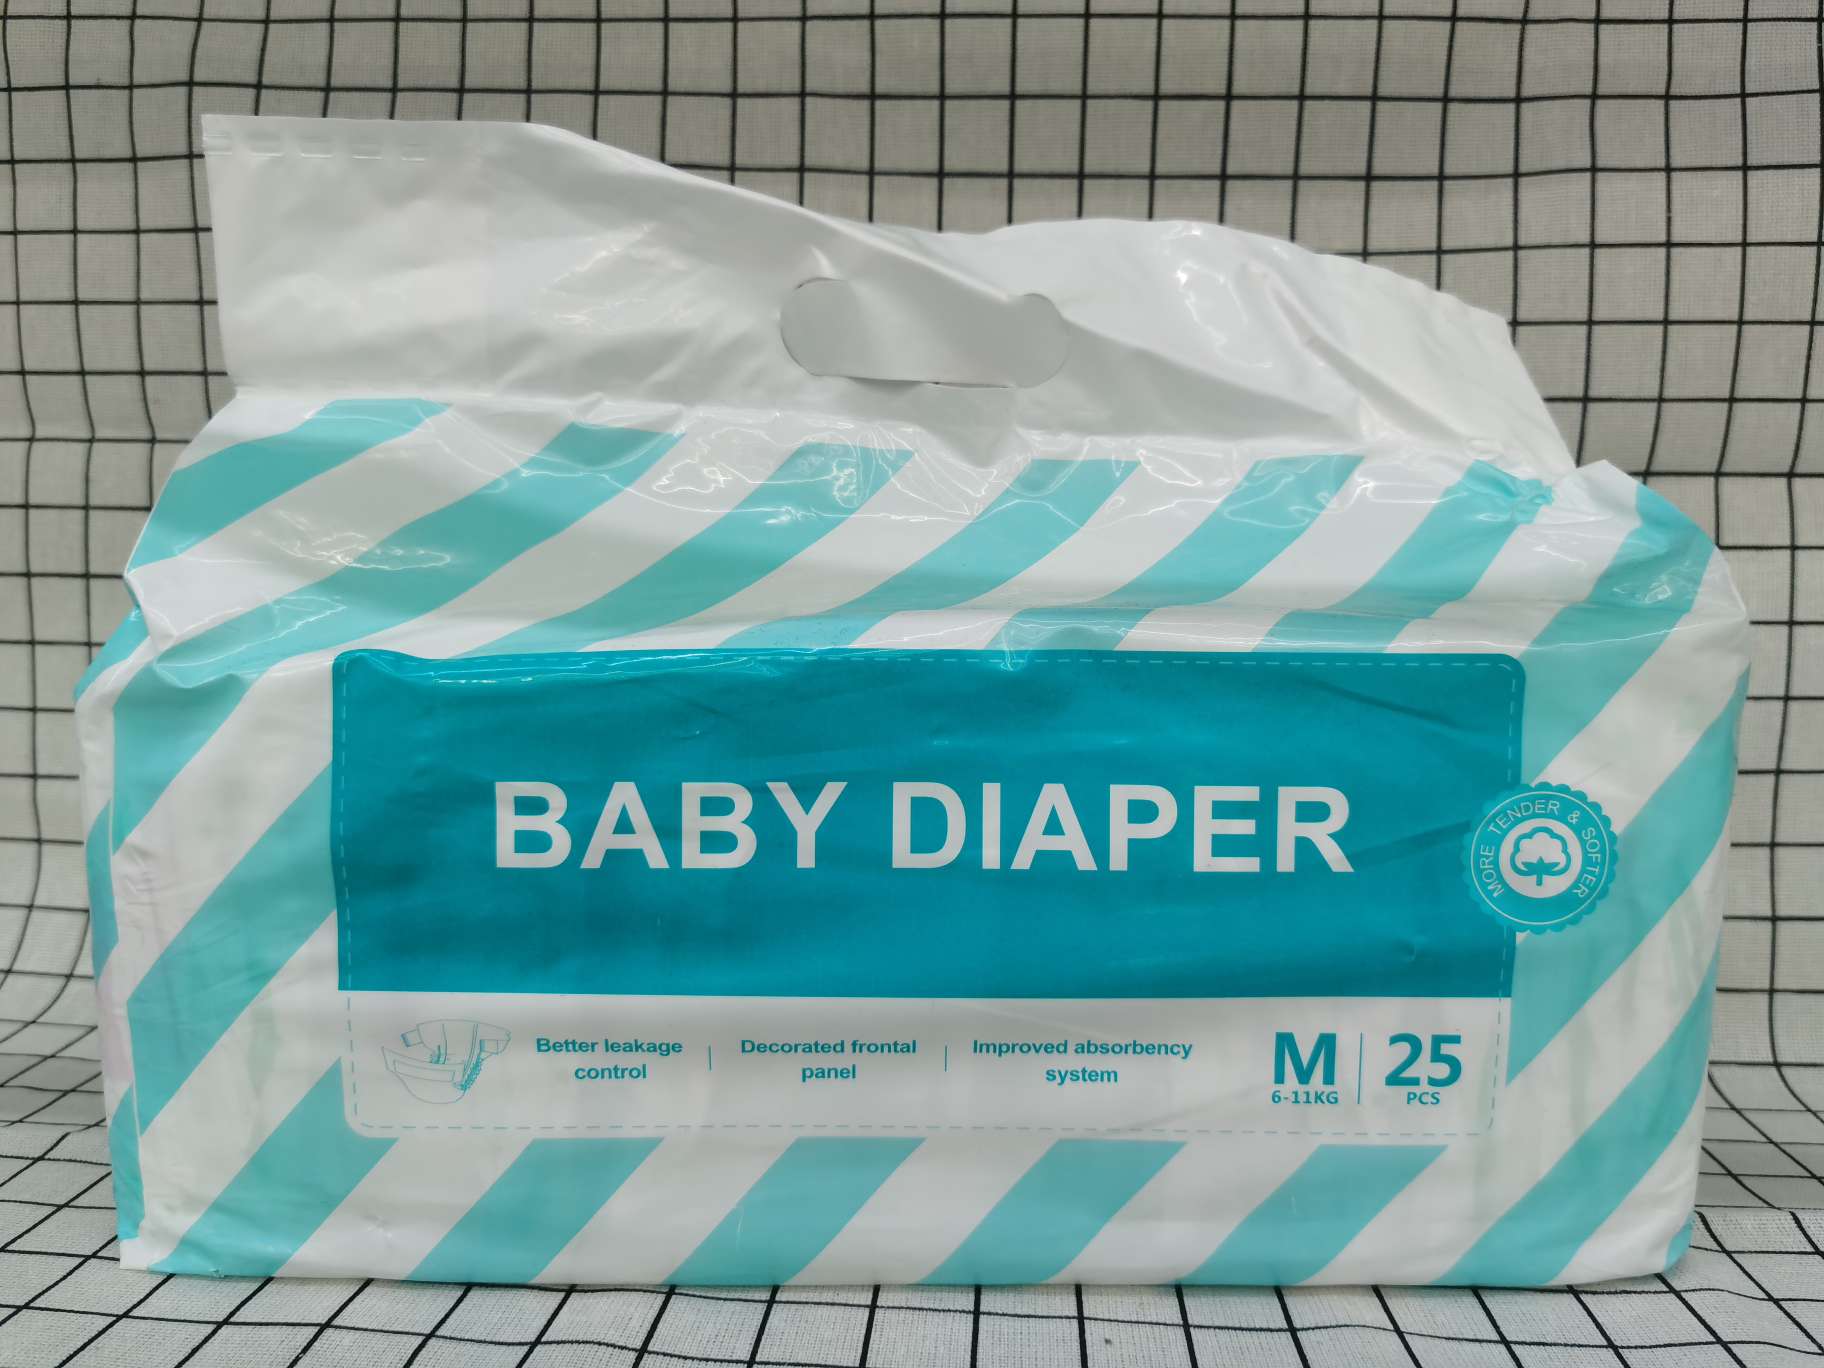 baby diaper: M: 25 pcs
电联订做详情图2